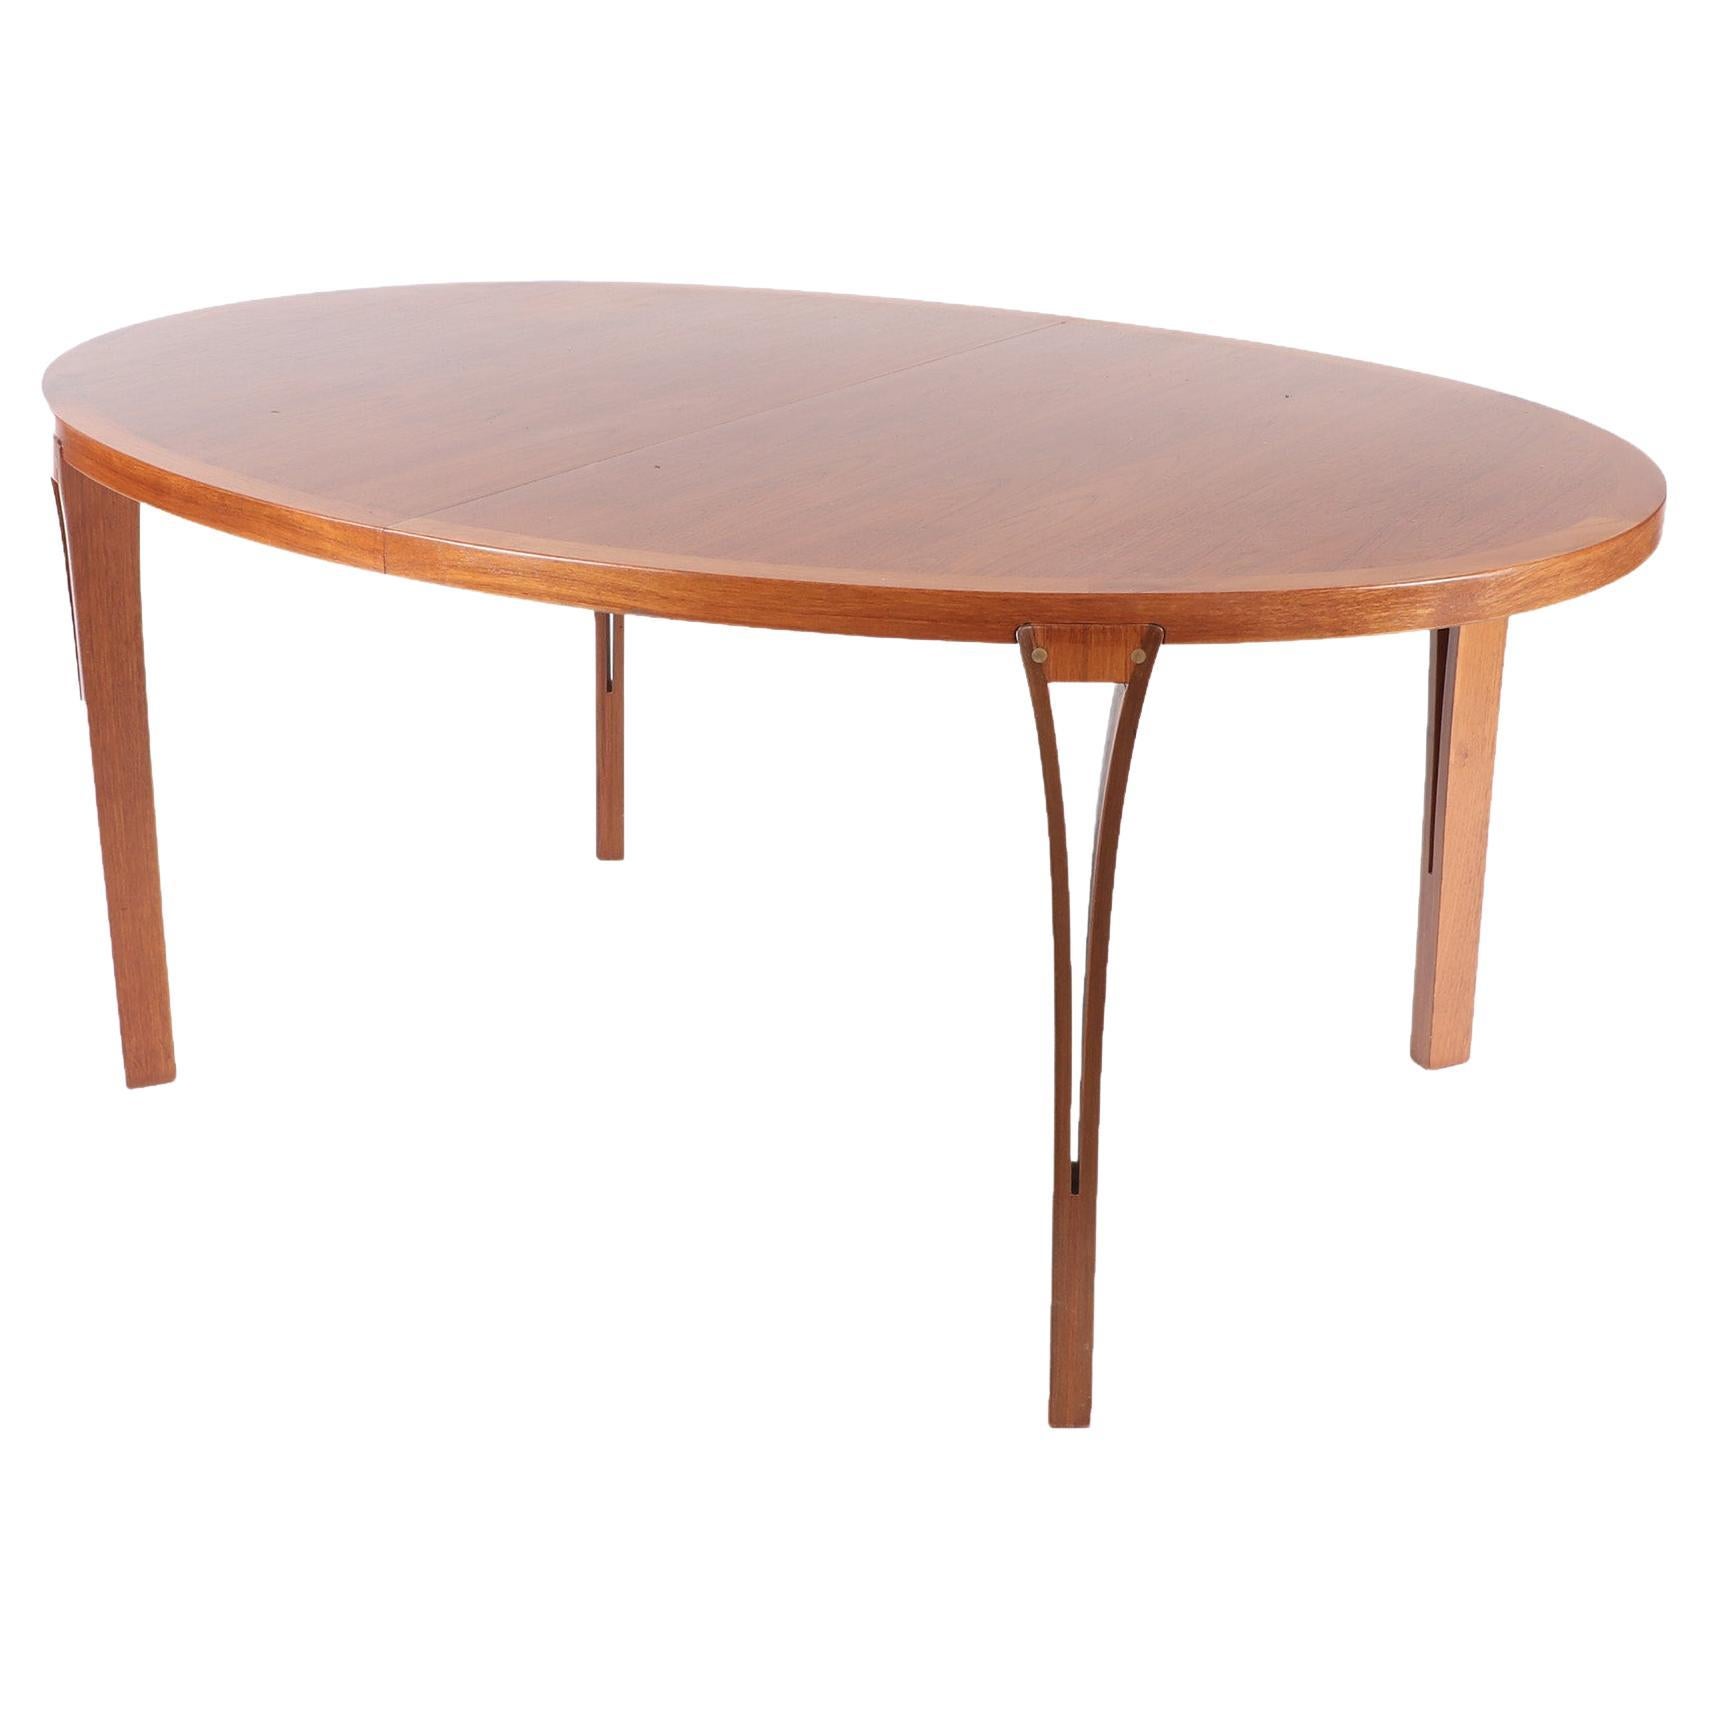 A signed Sven Ellekaer mid century modern teak Danish dining room table c. 1960 For Sale